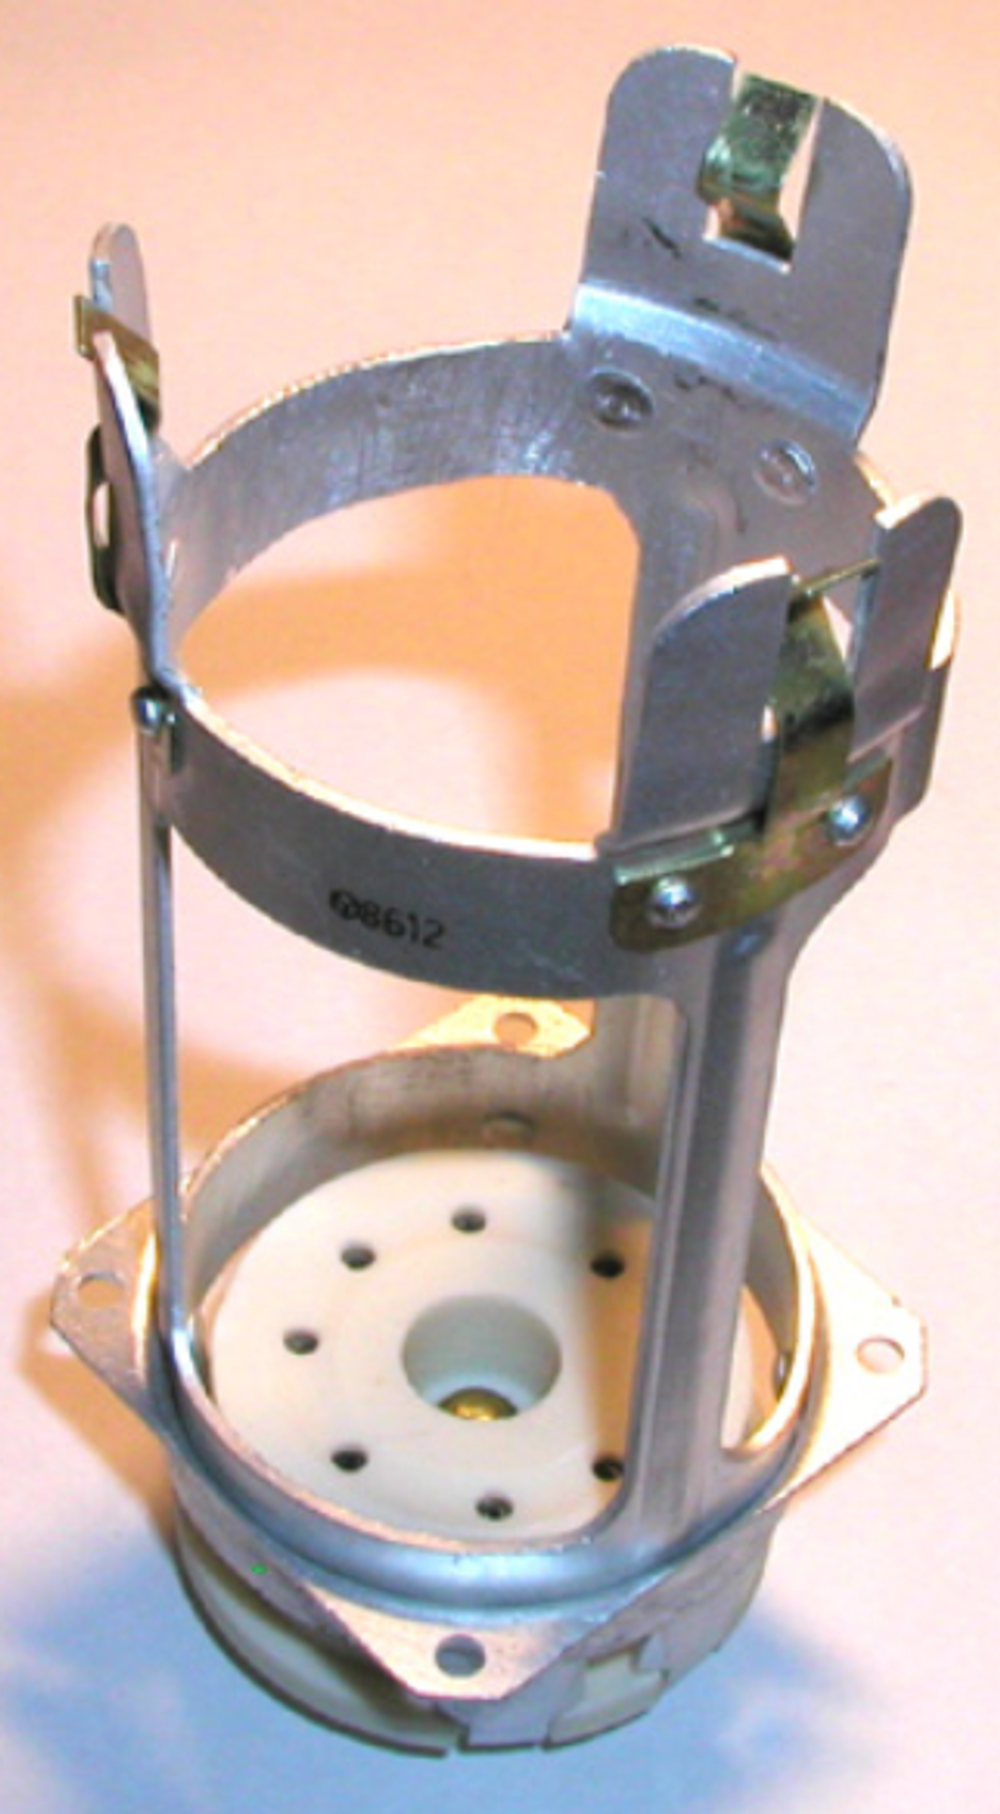 Панель лампы для ГУ-50 (стакан), керамика, демонтаж